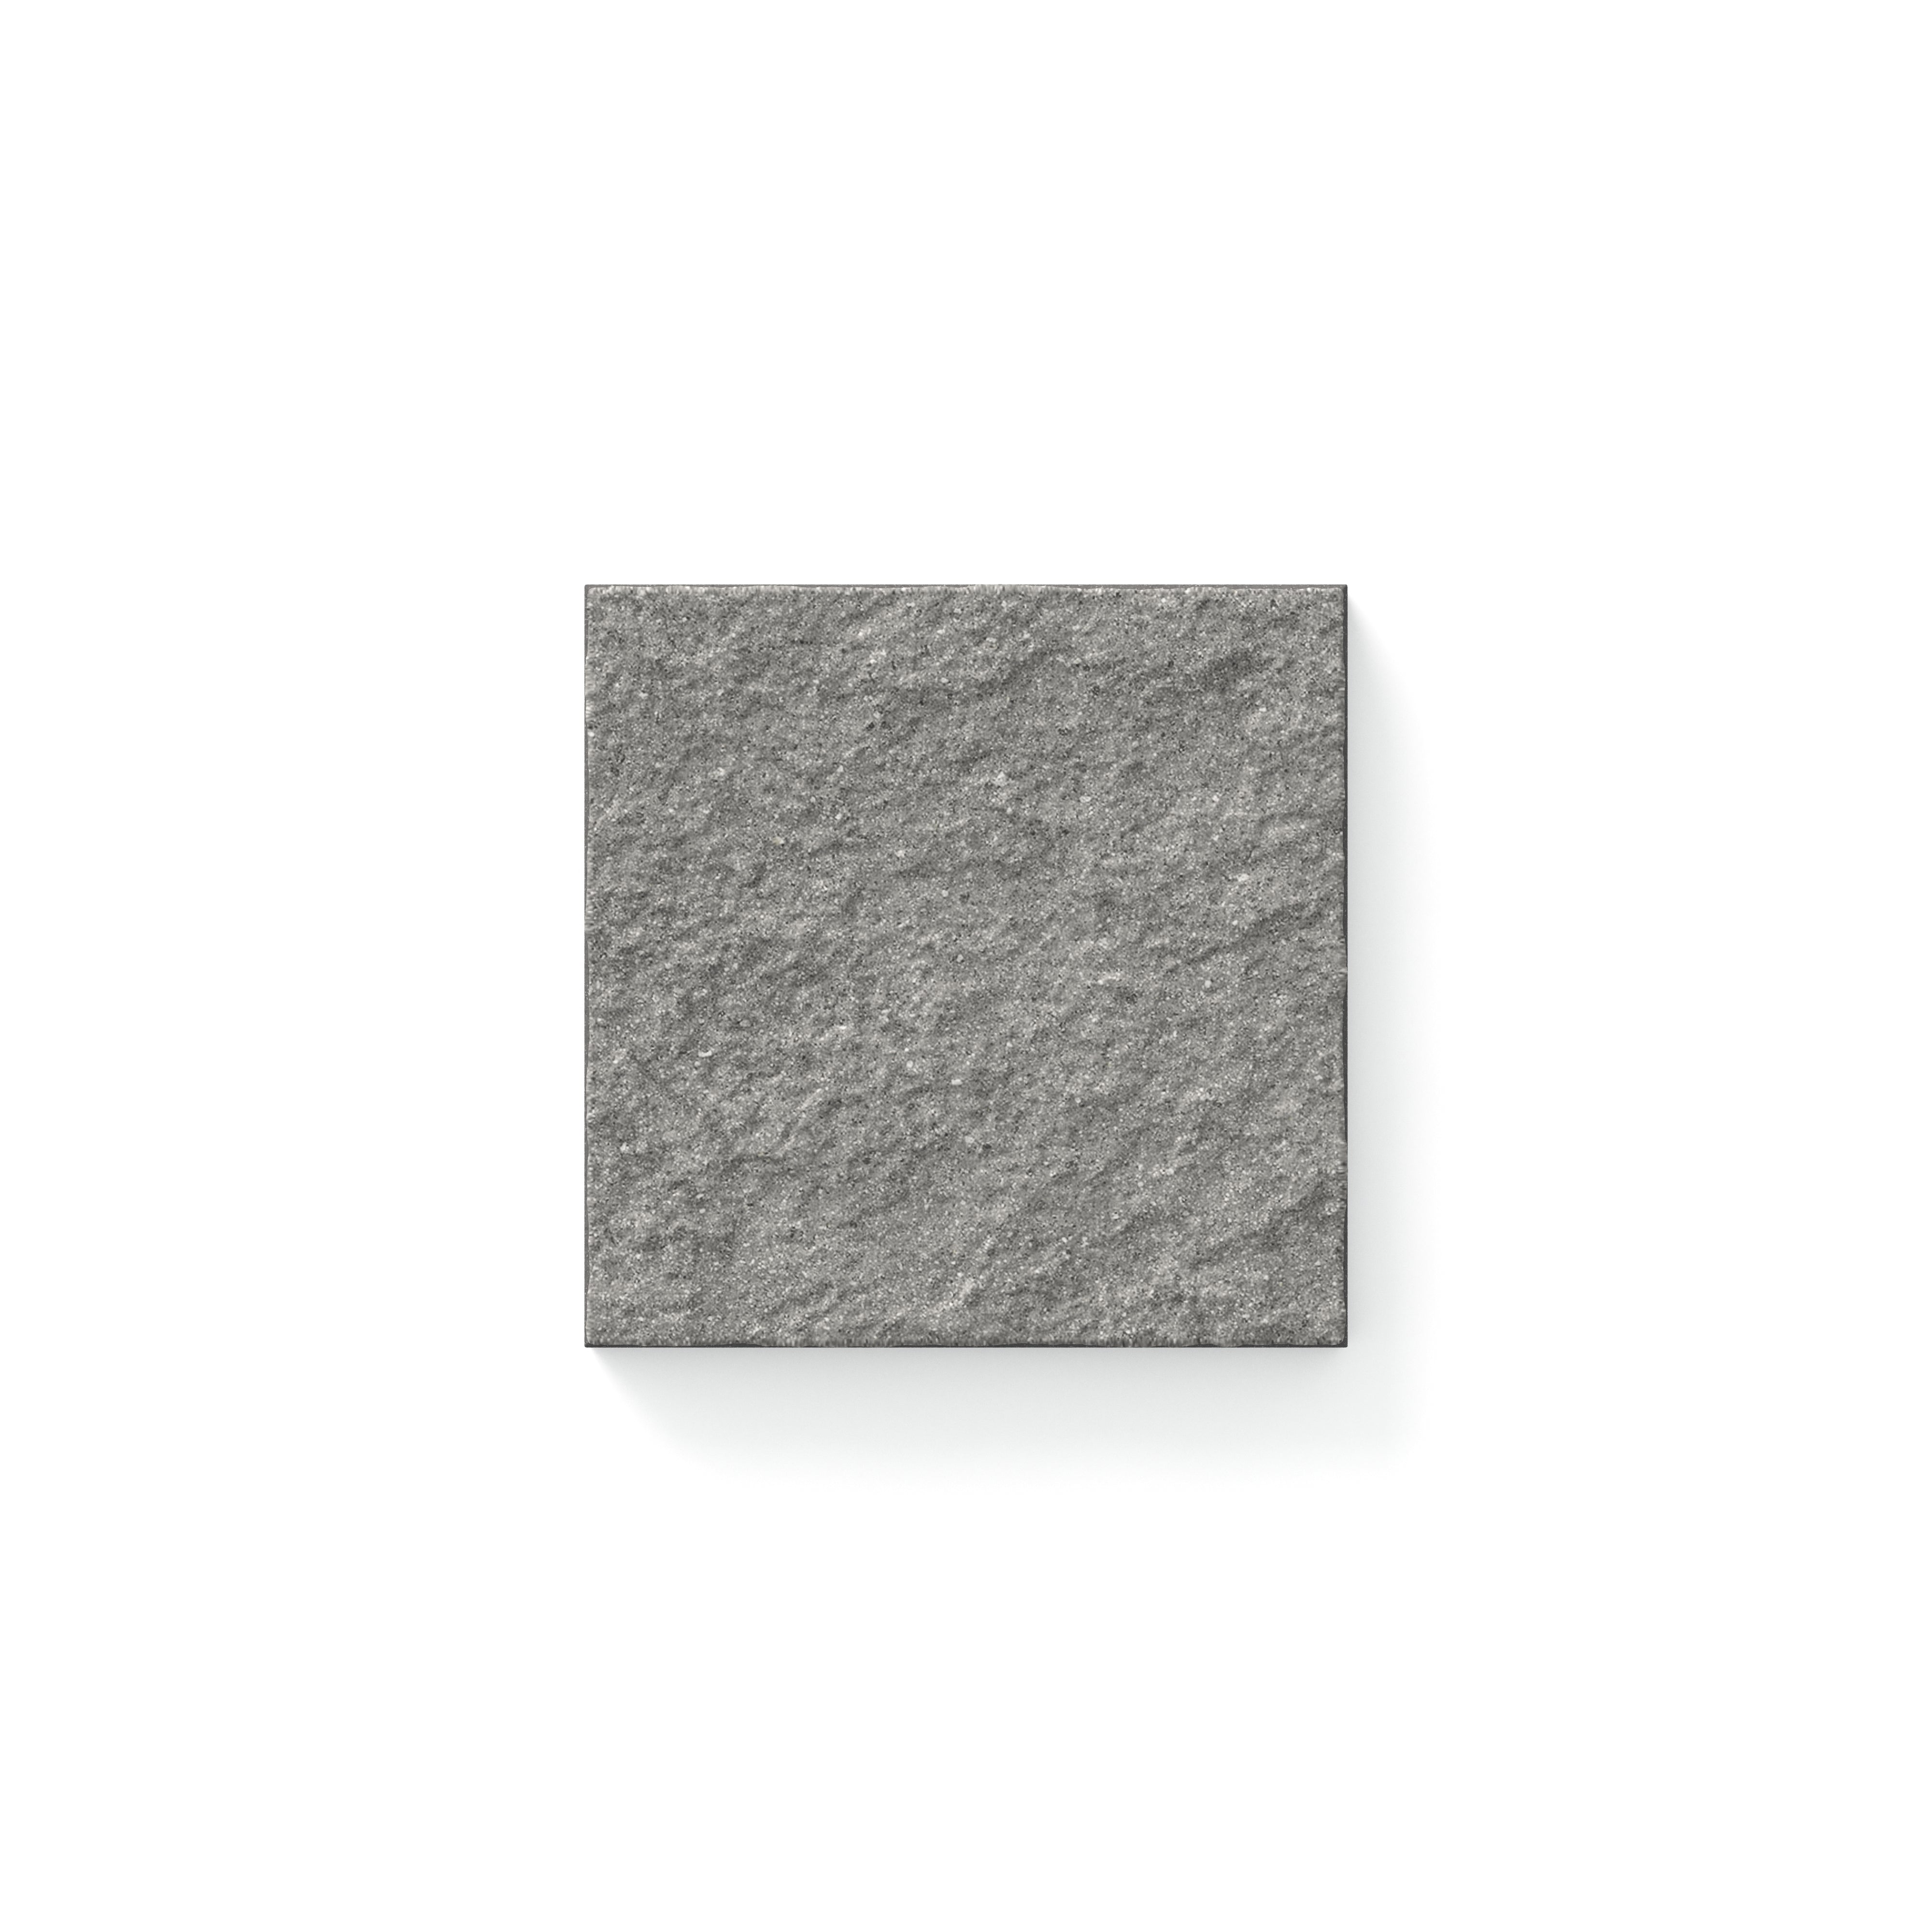 Palmer Raw Charcoal 4x4 Tile Sample